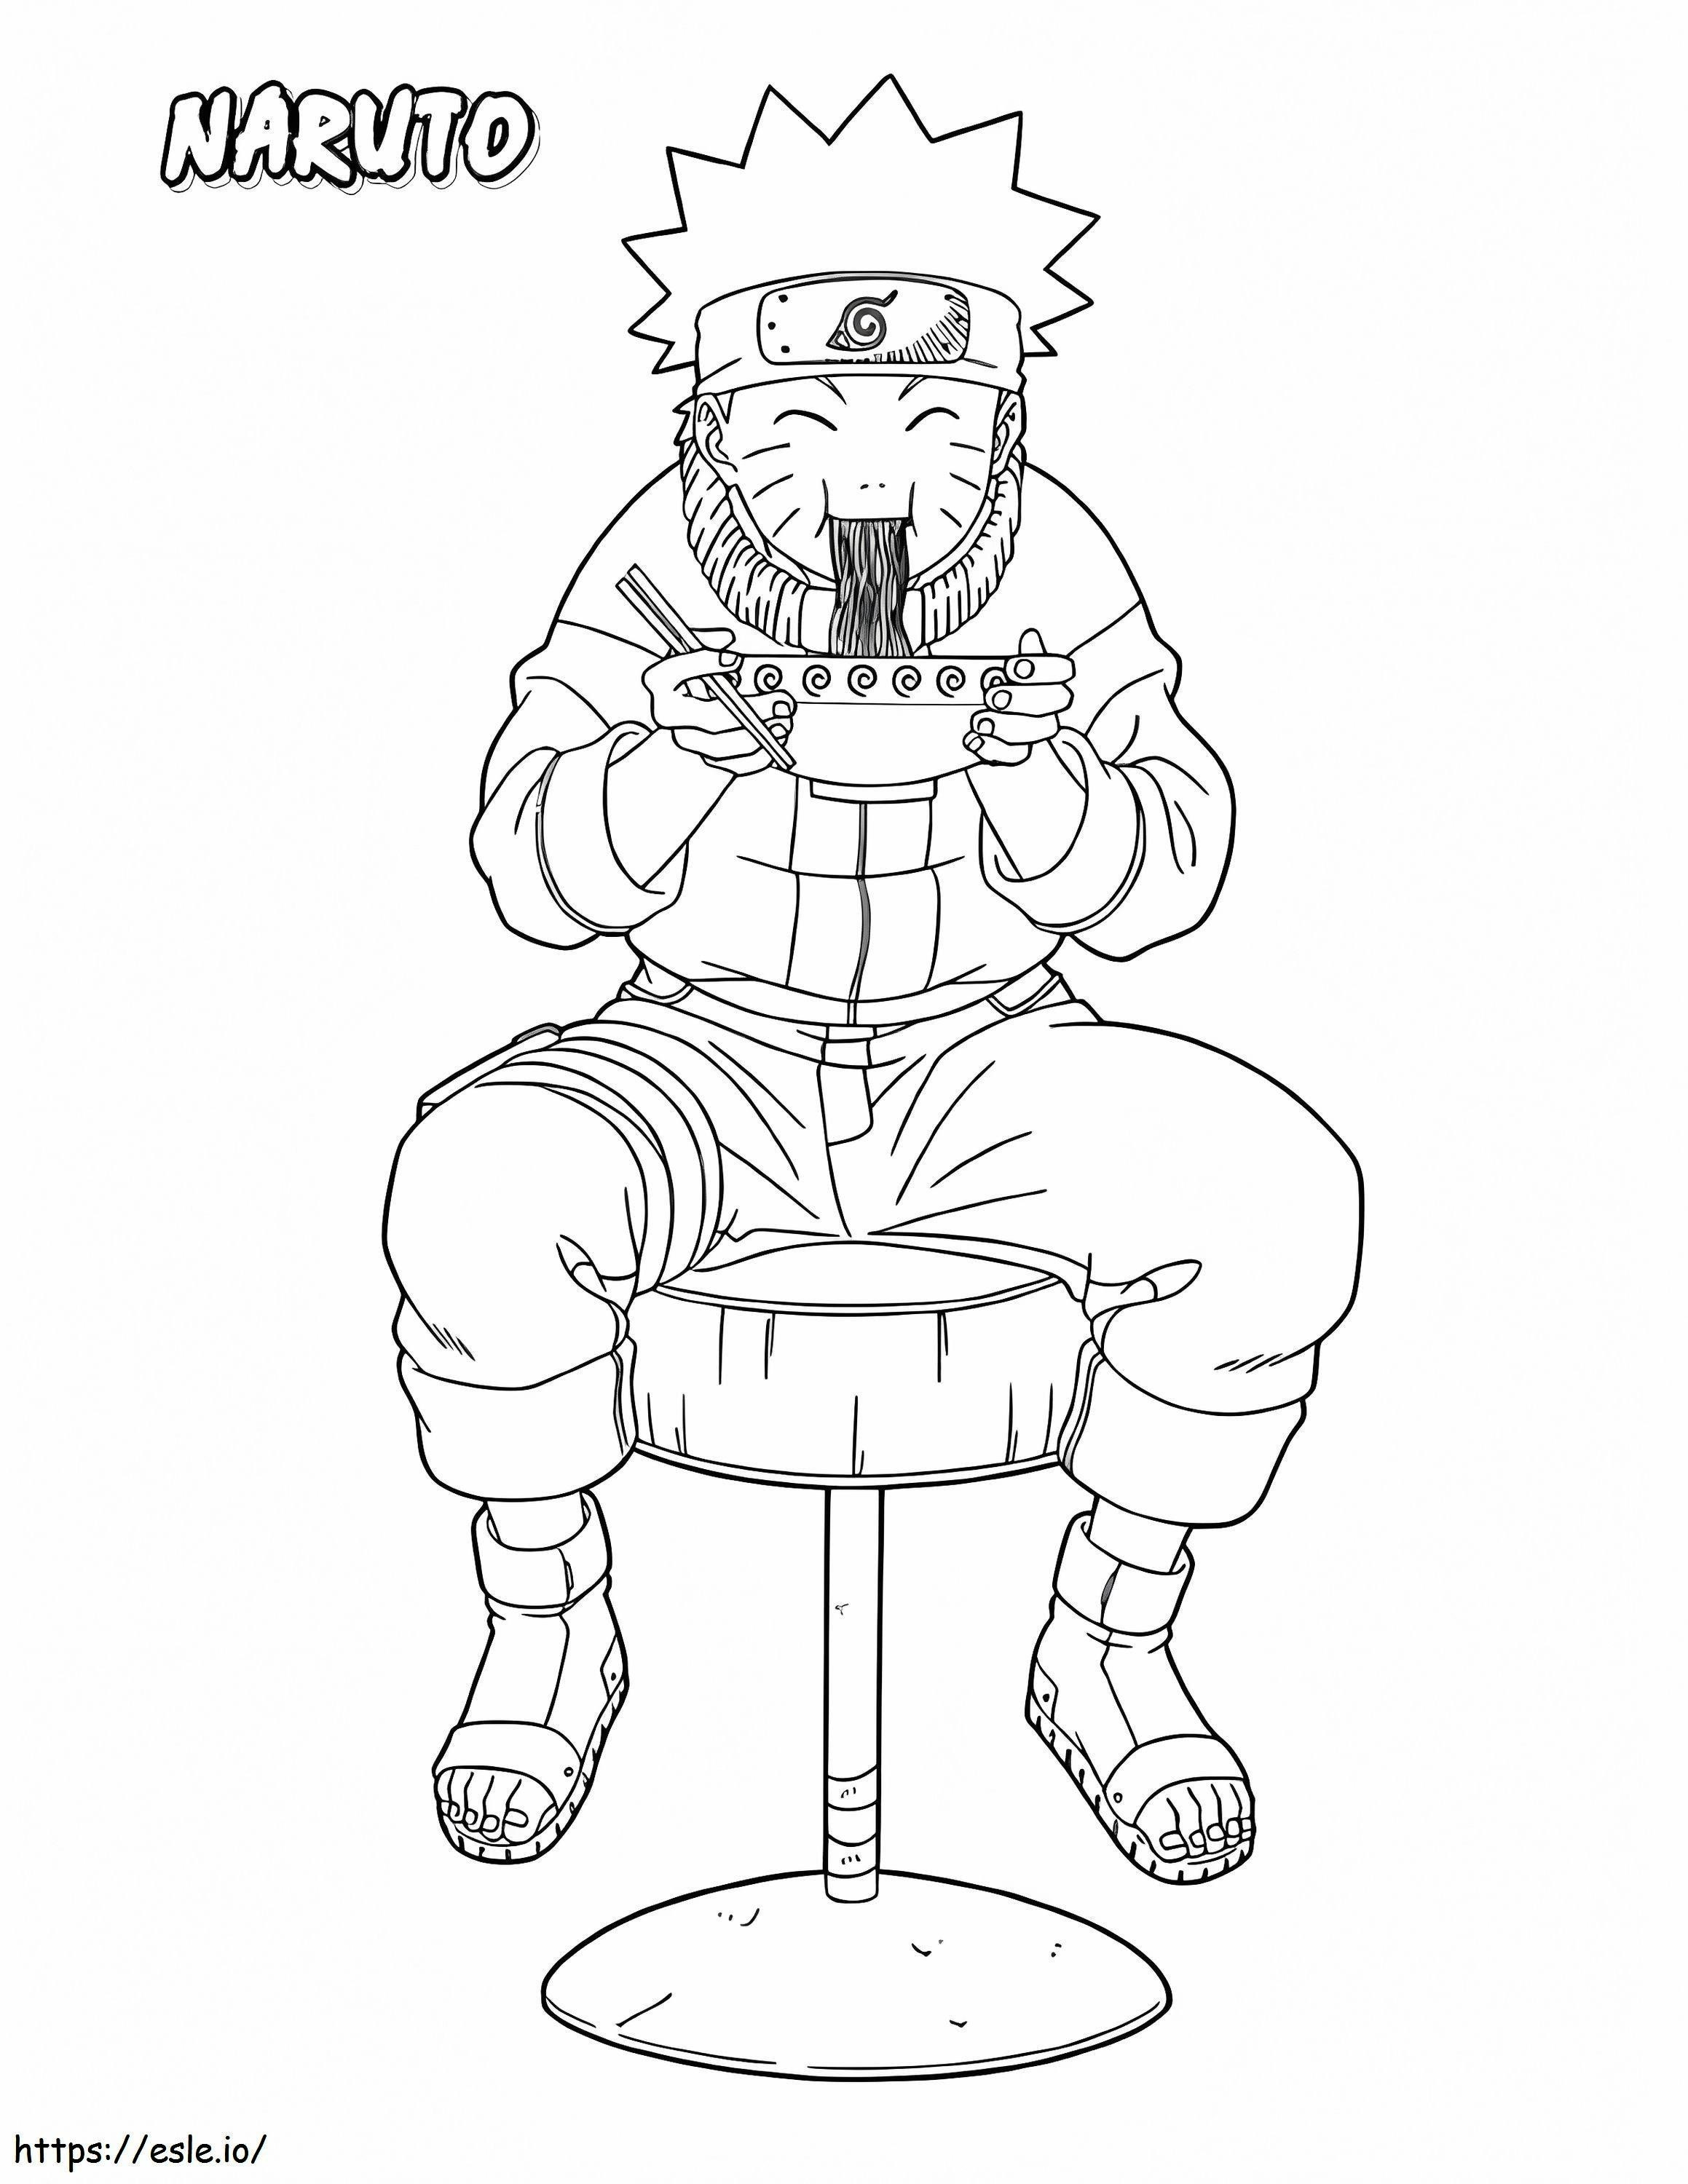 1561347953 Naruto Eating Ramen A4 coloring page